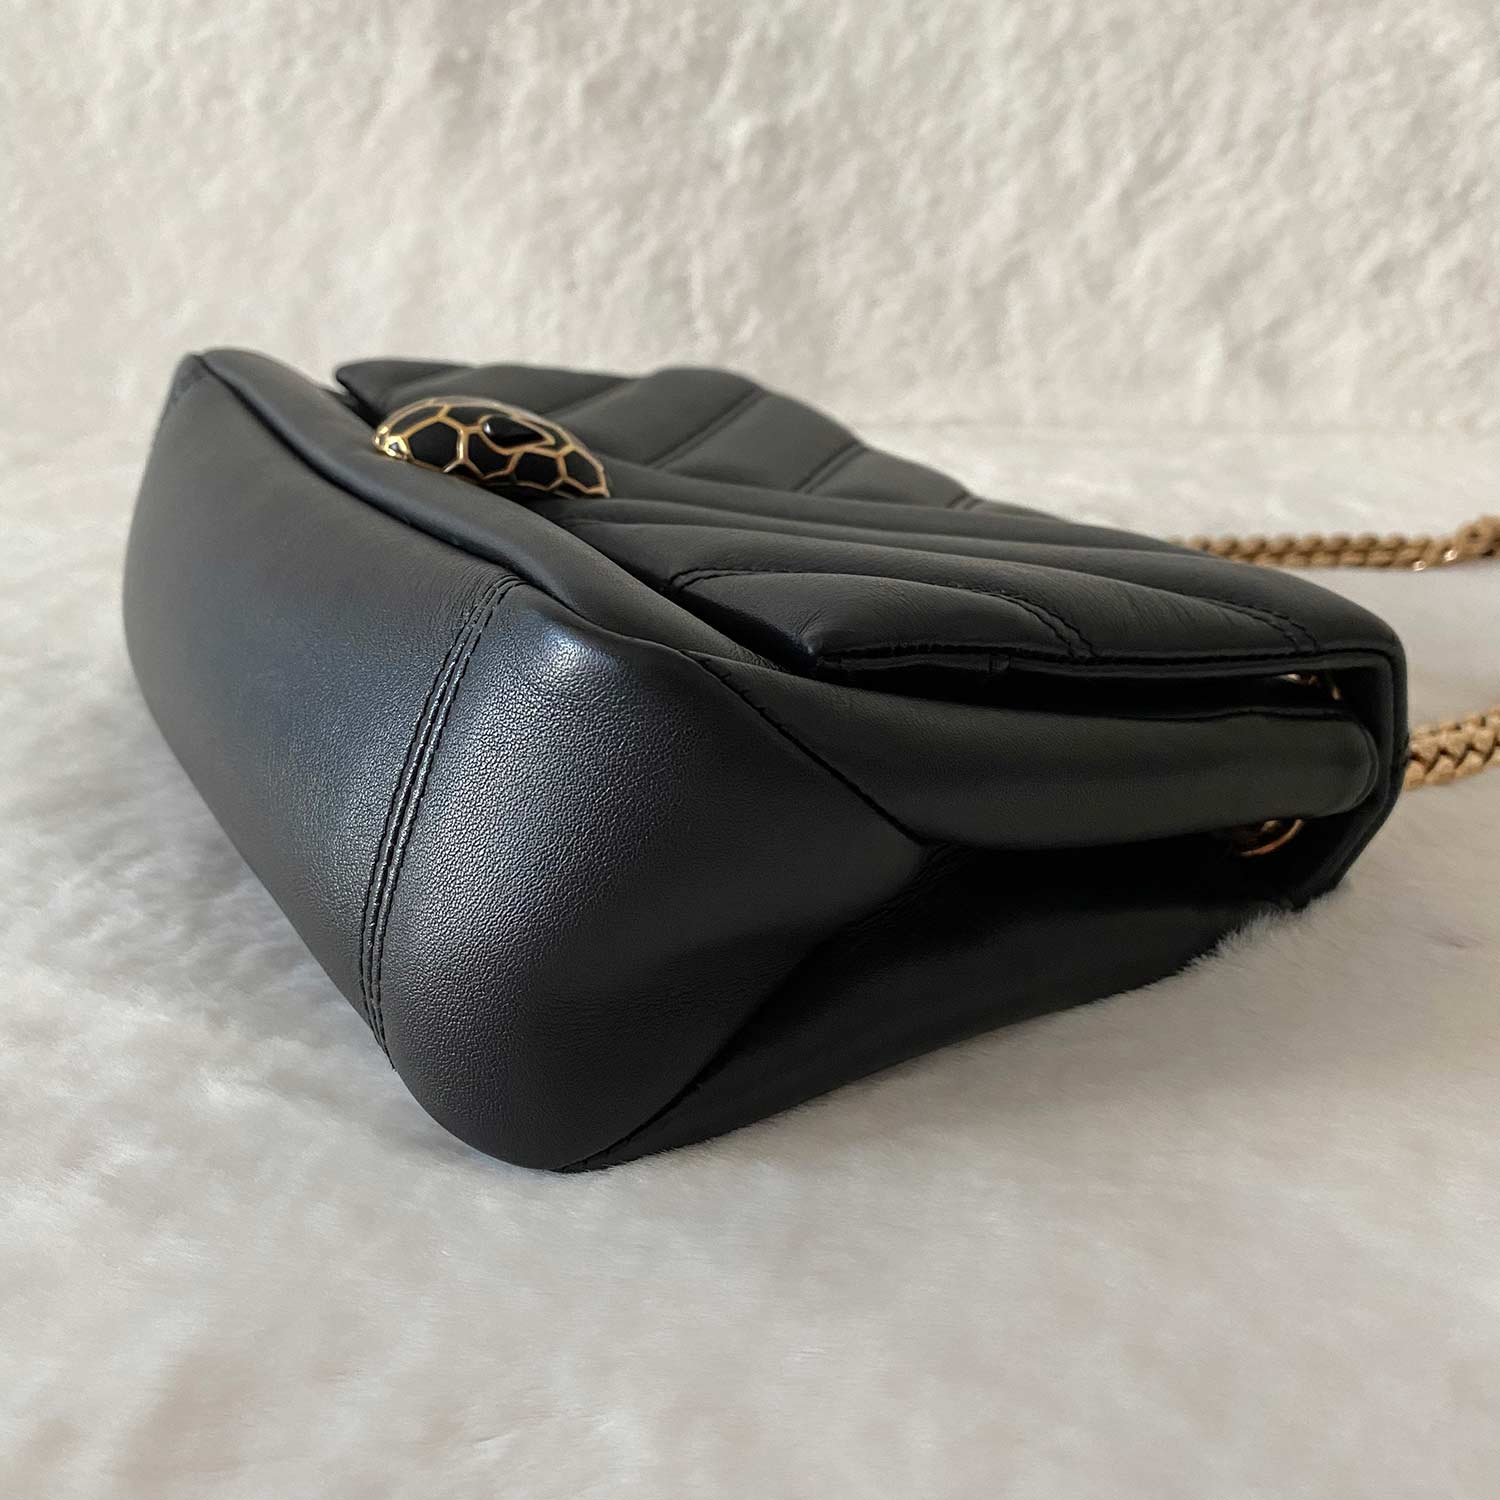 Shop authentic Bvlgari Serpenti Cabochon Shoulder Bag at revogue for ...